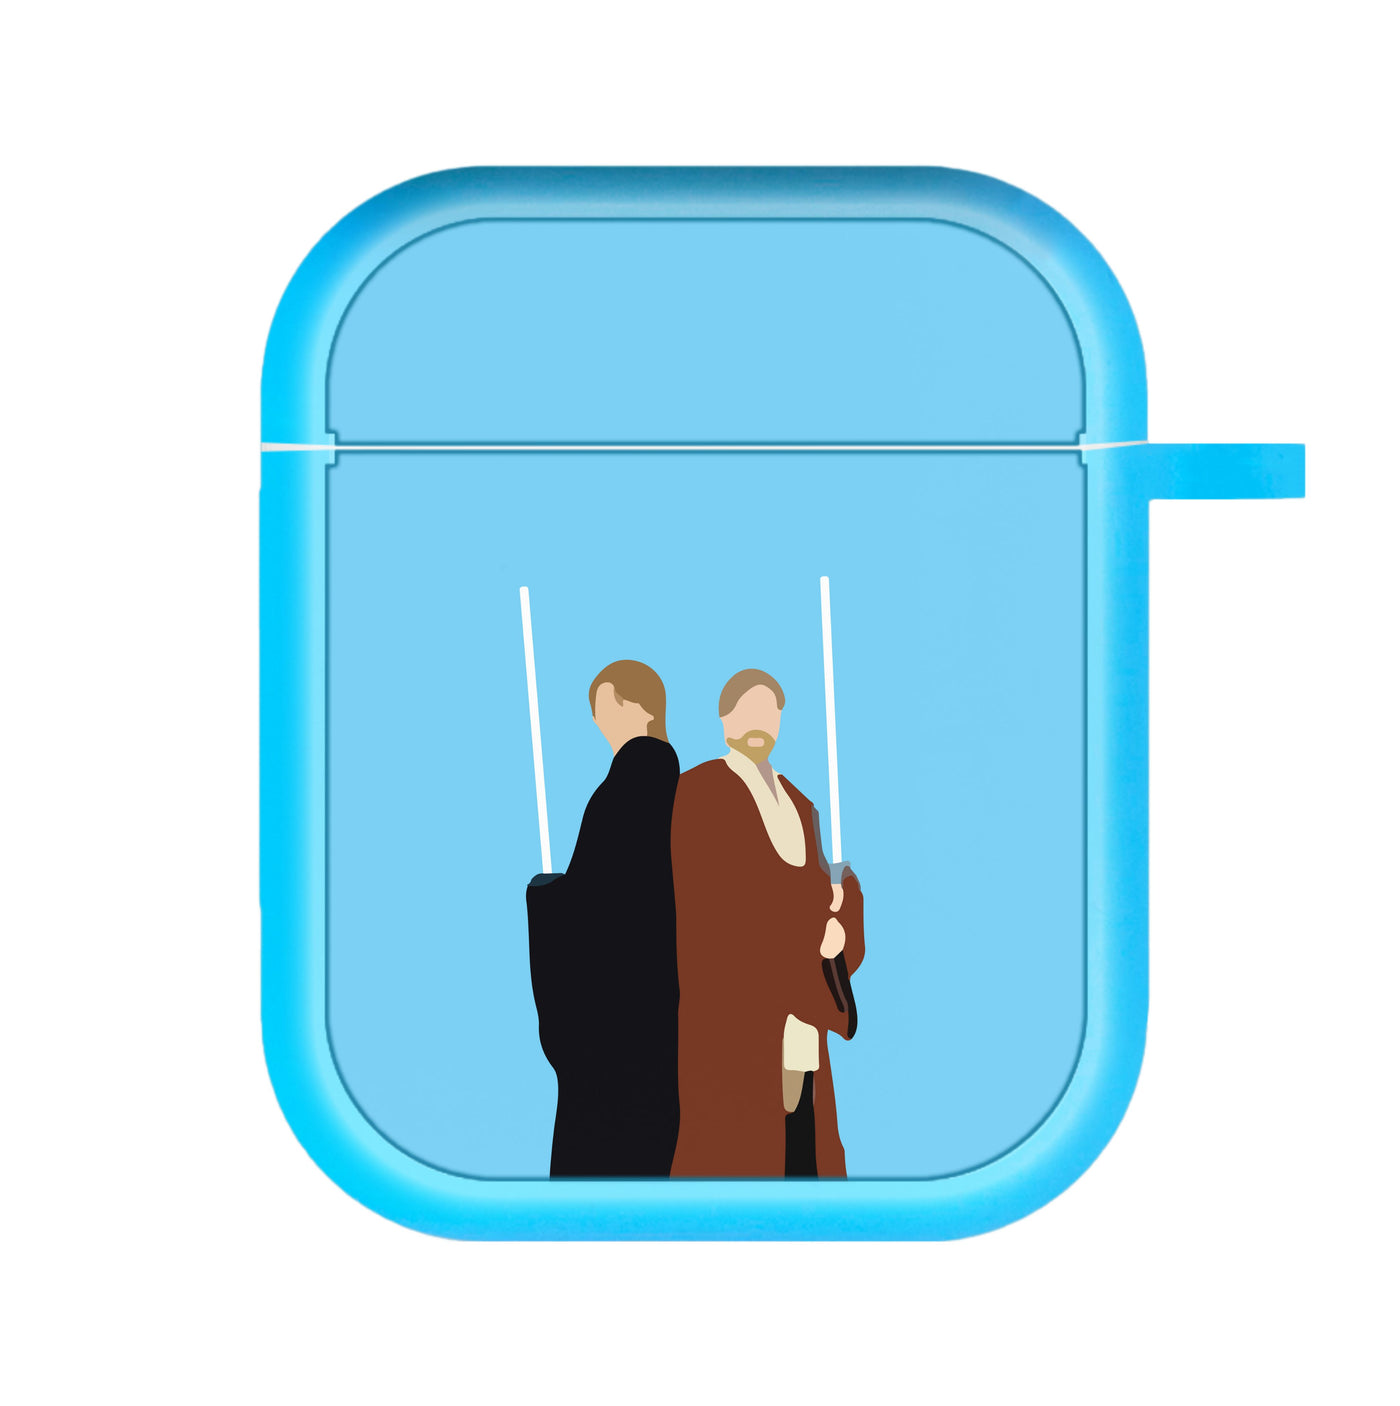 Luke Skywalker And Obi-Wan Kenobi - Star Wars AirPods Case